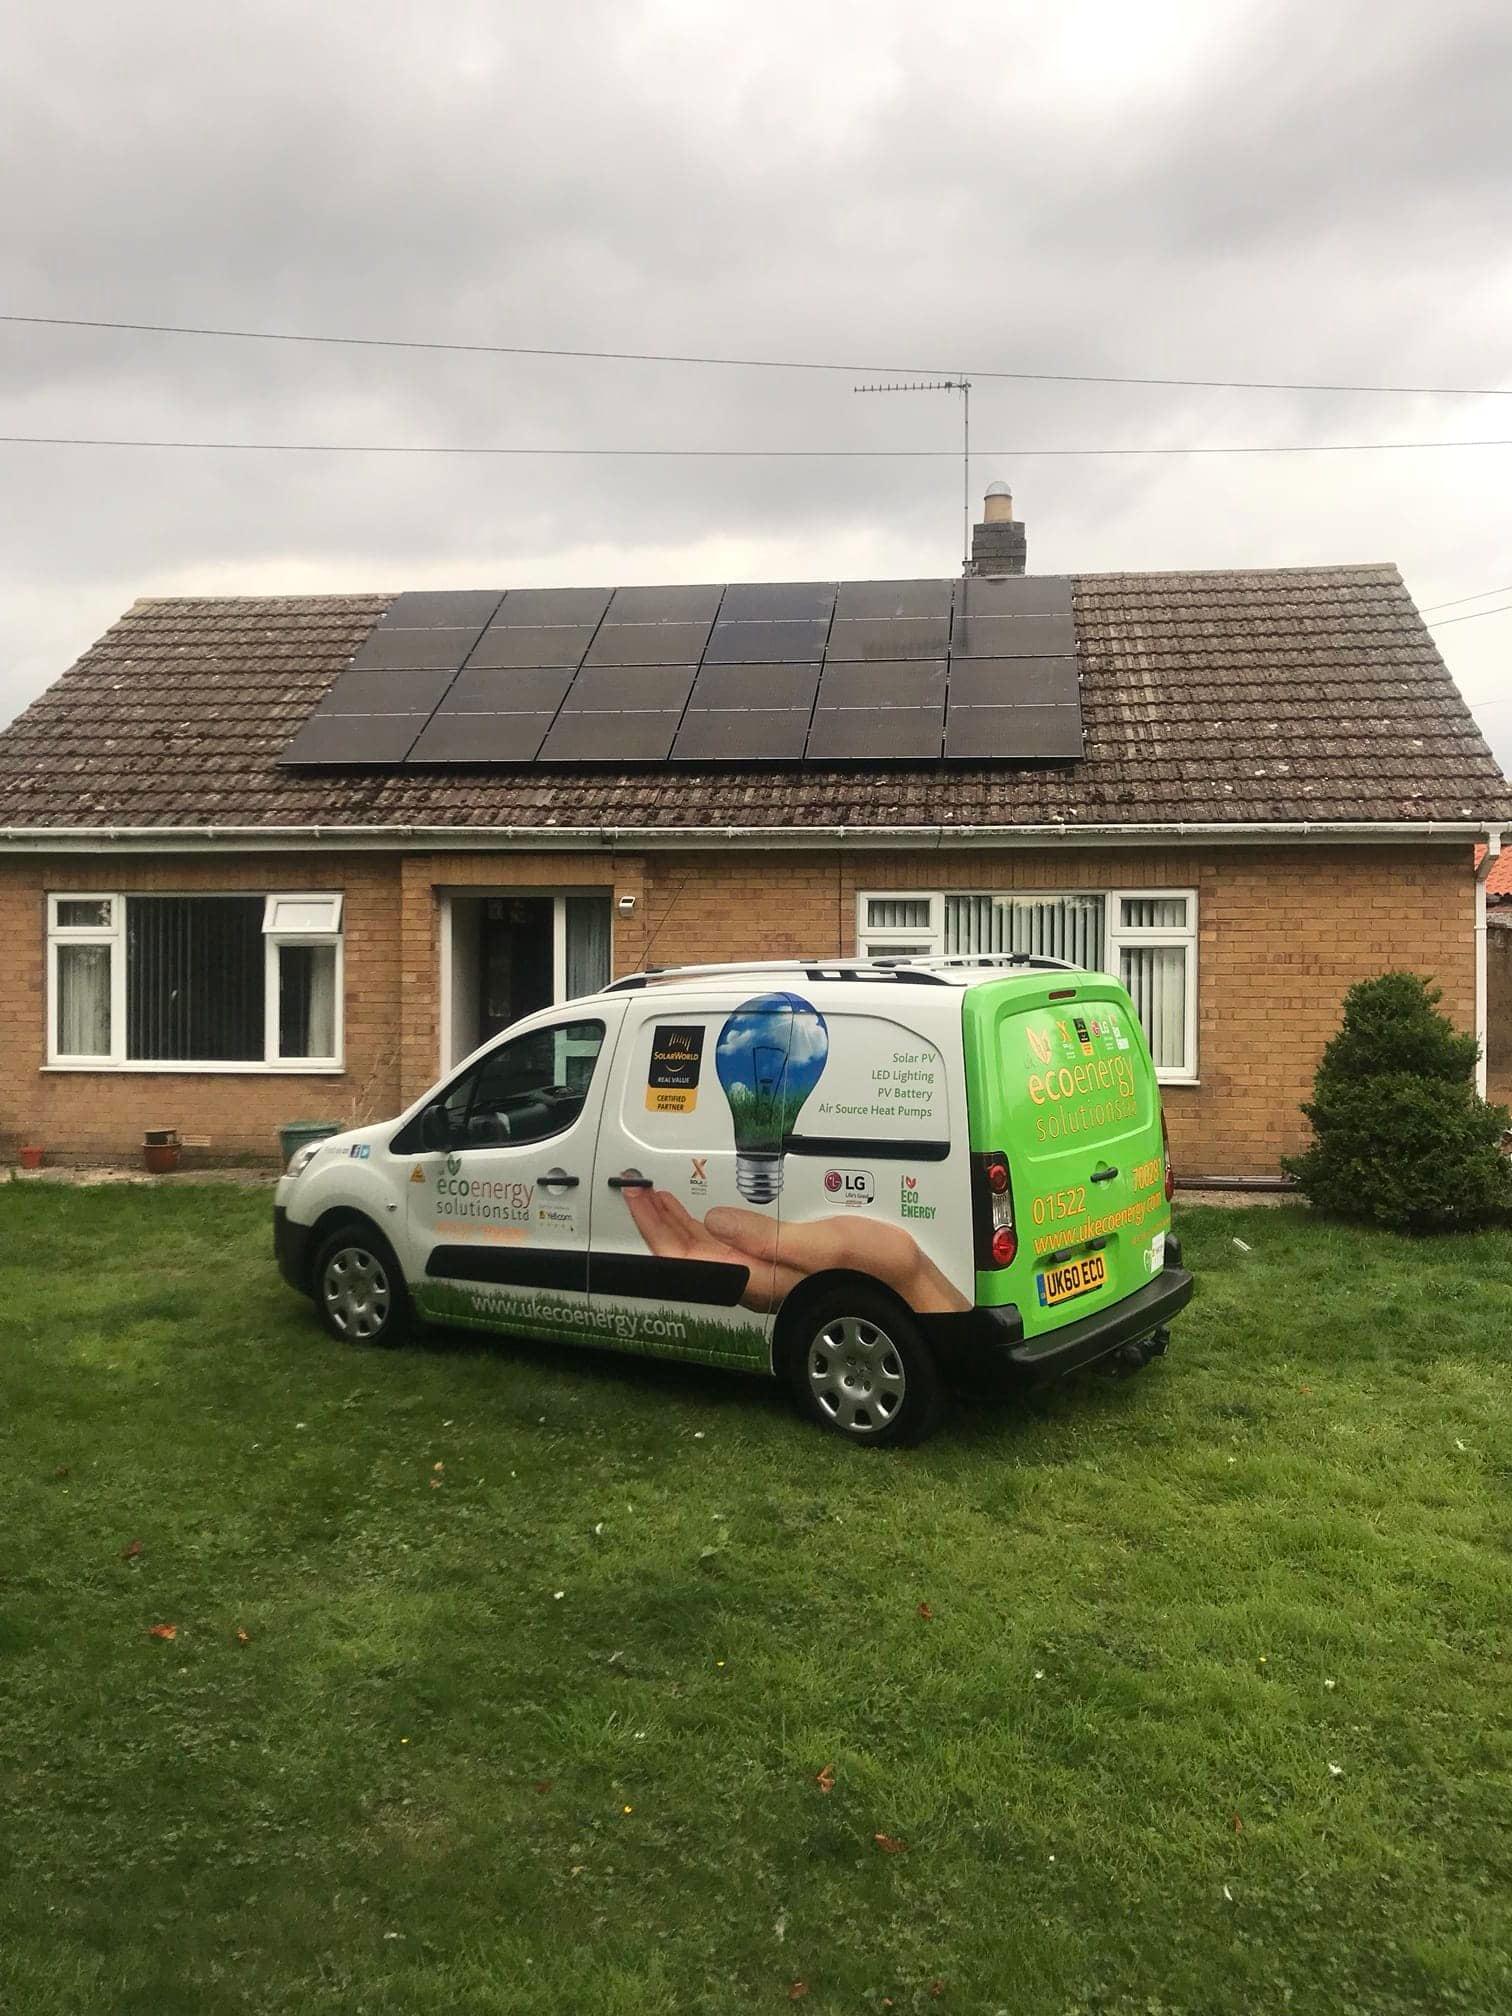 Images UK Eco Energy Solutions Ltd